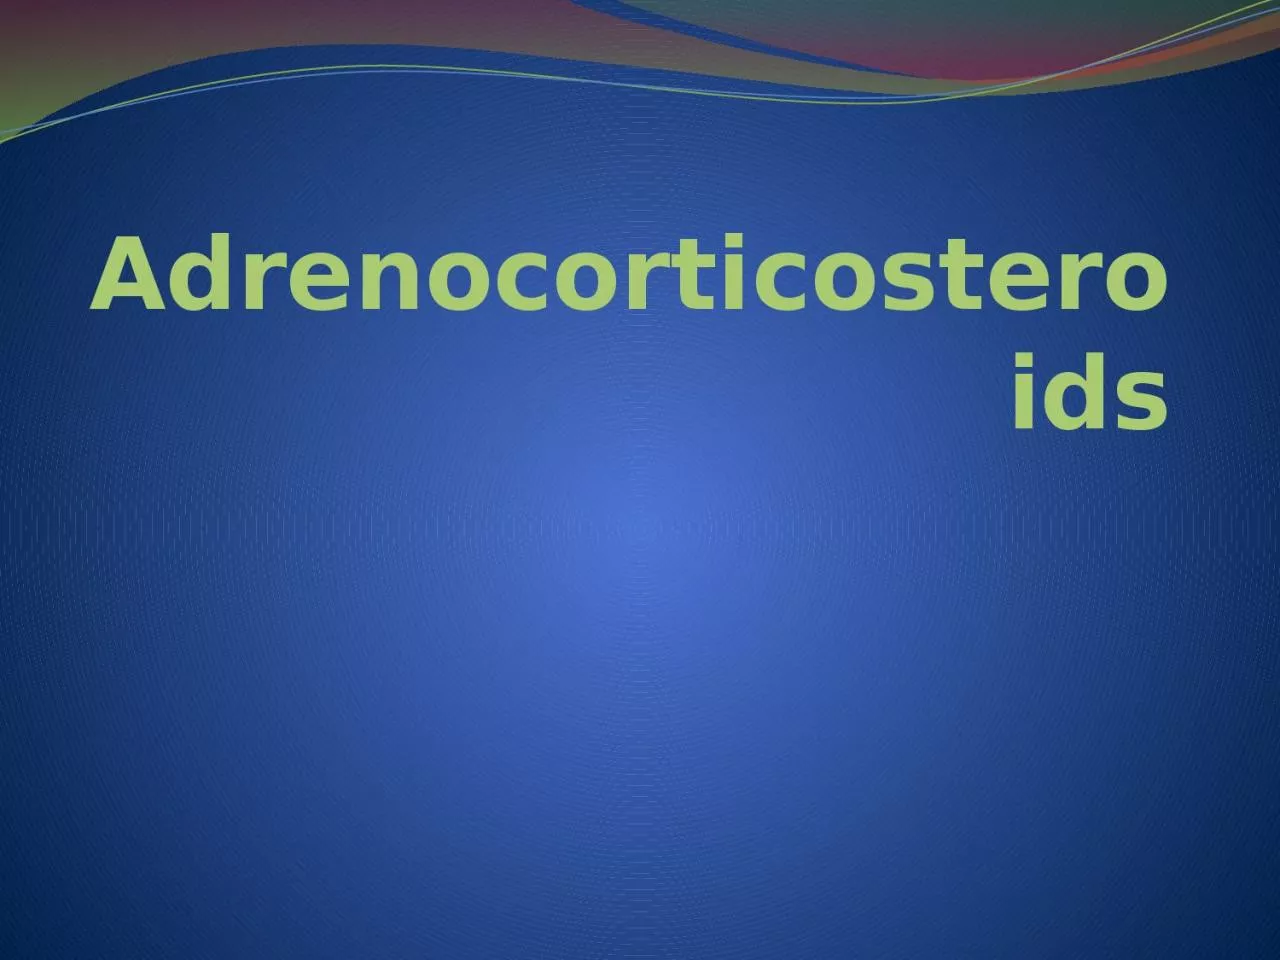 Adrenocorticosteroids The adrenal gland consists of the cortex and the medulla. The medulla